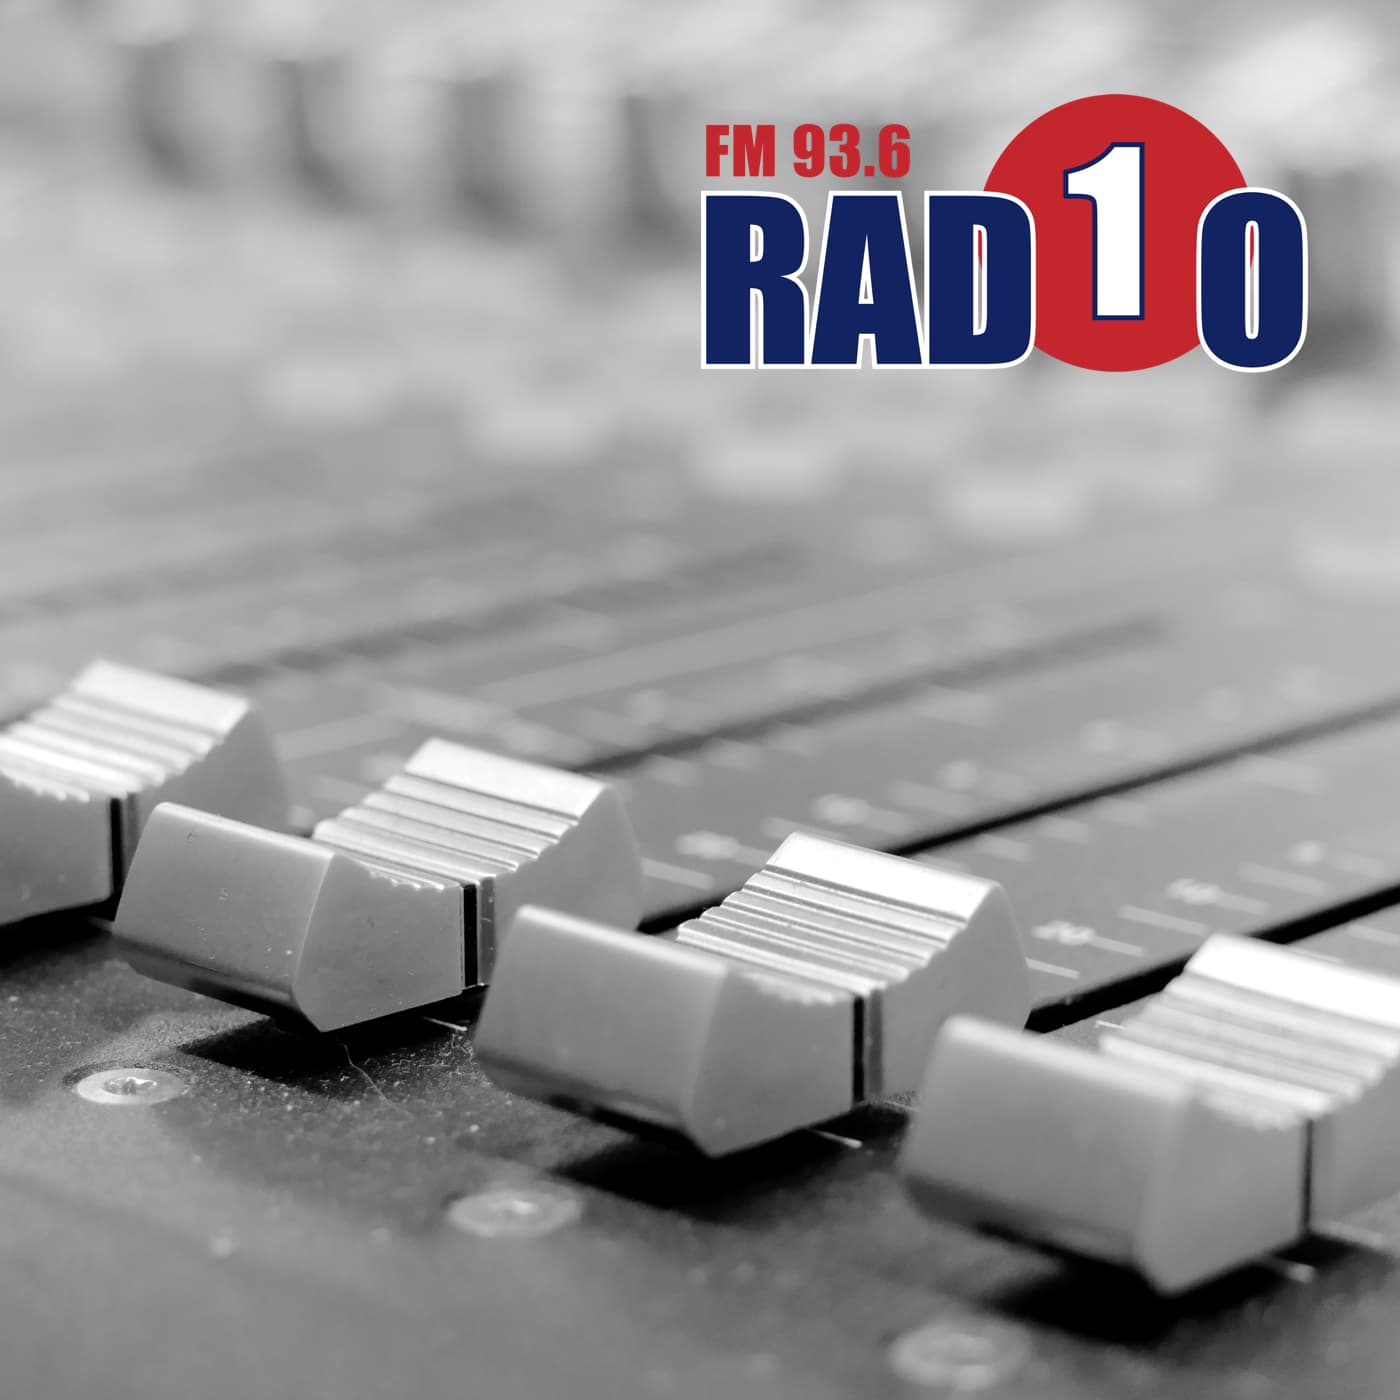 Radio 1 – Talkradio